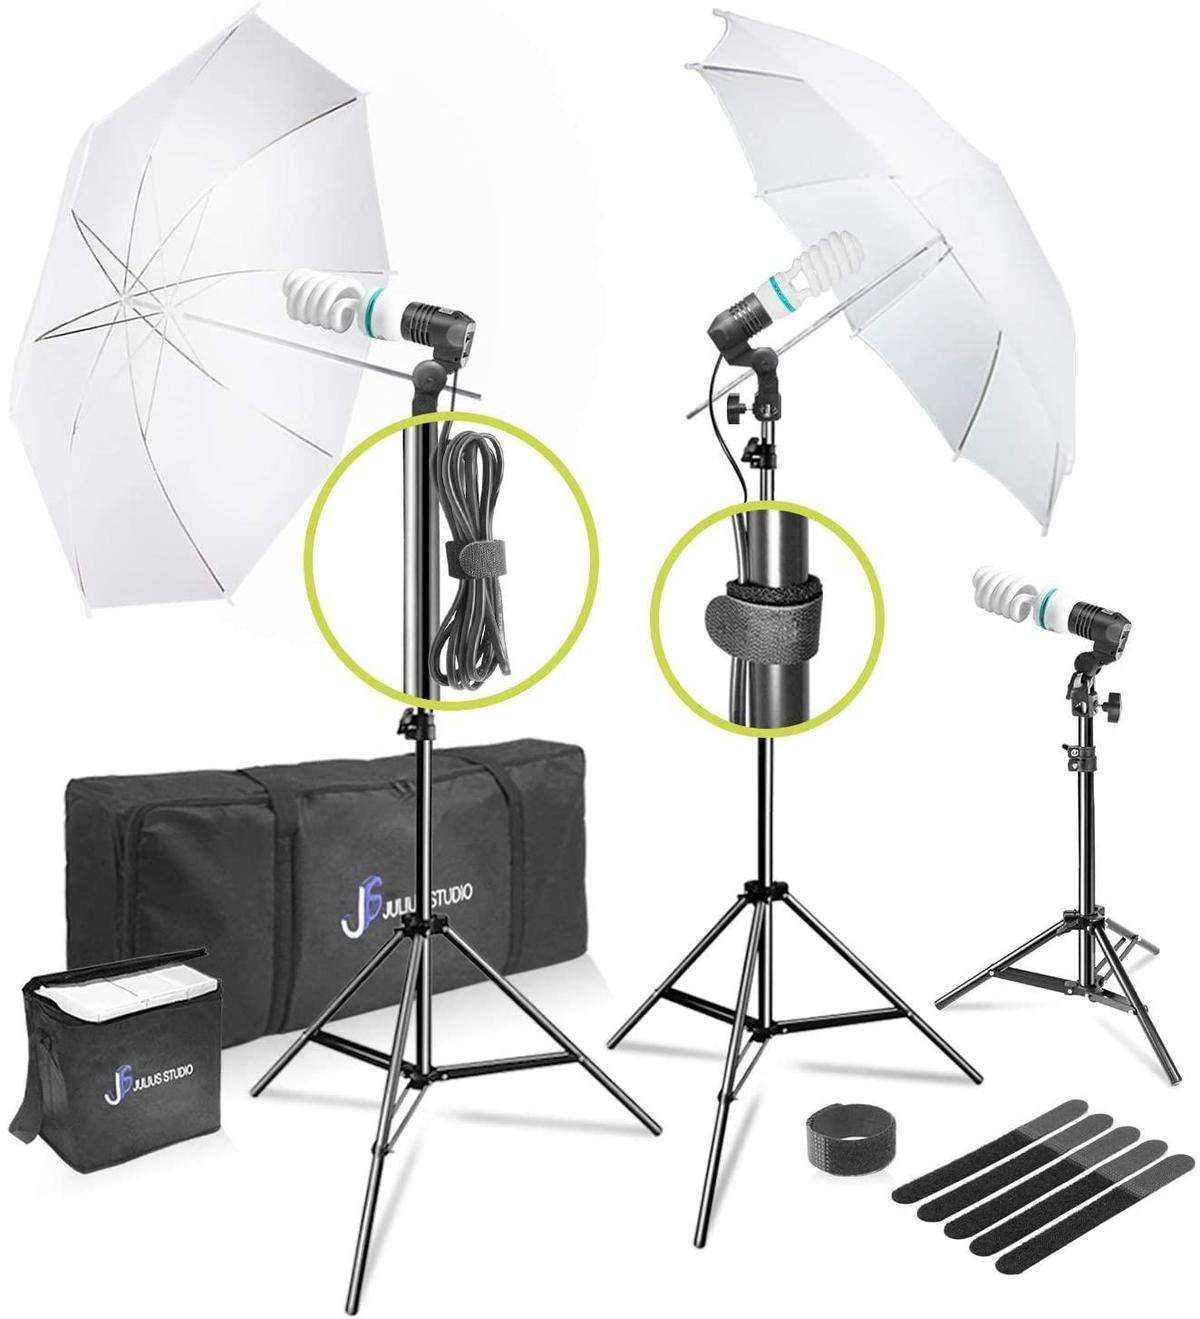 Julius Studio 660W Photo, Video, Portrait Photography Studio Day Light Umbrella $62.90 MSRP